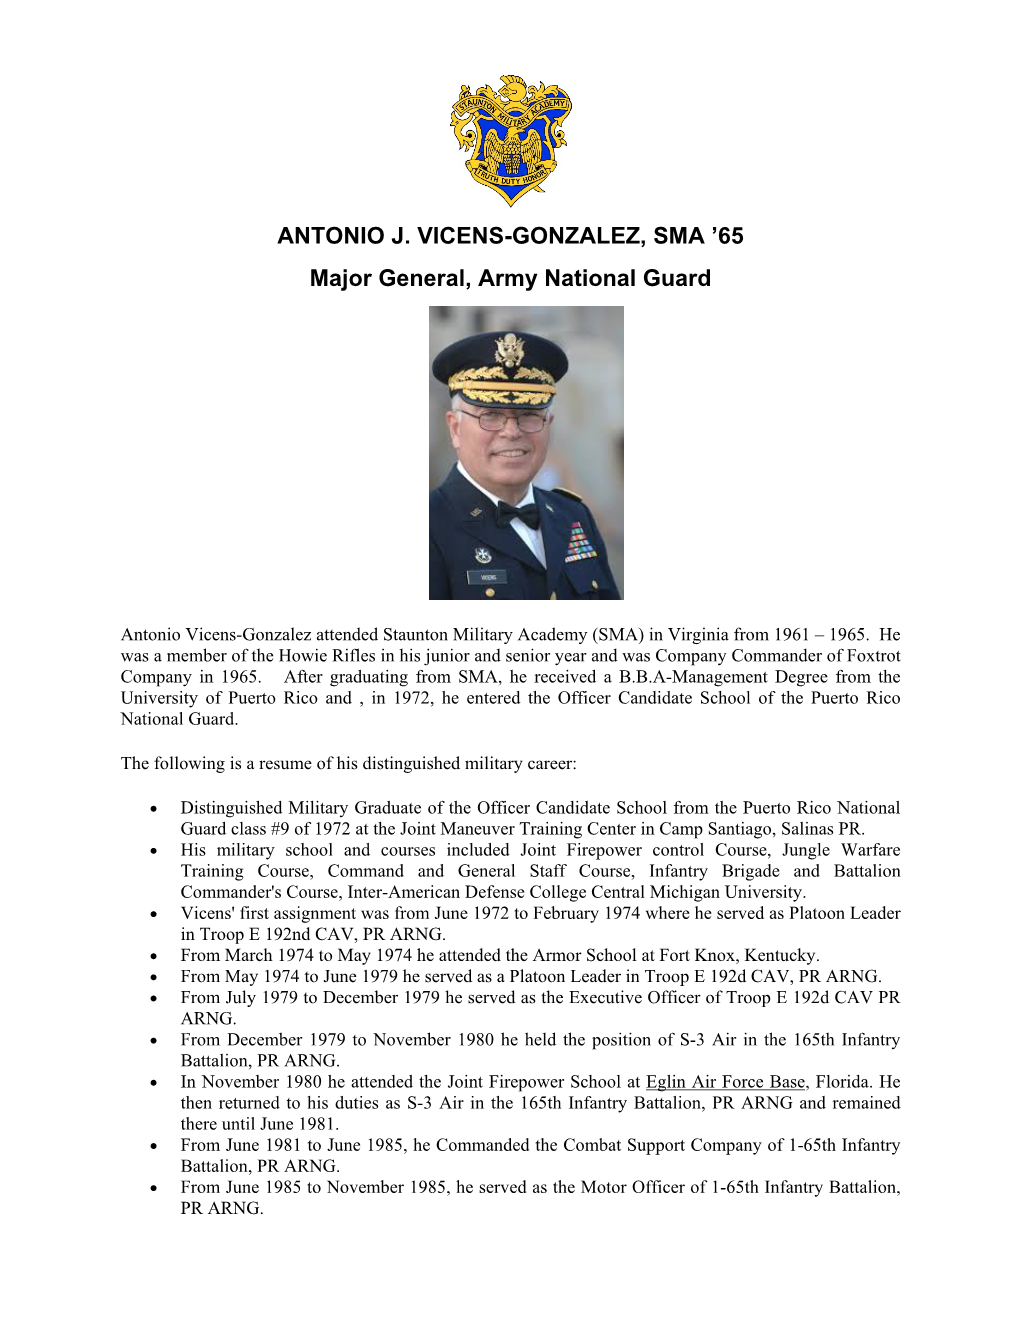 ANTONIO J. VICENS-GONZALEZ, SMA ’65 Major General, Army National Guard